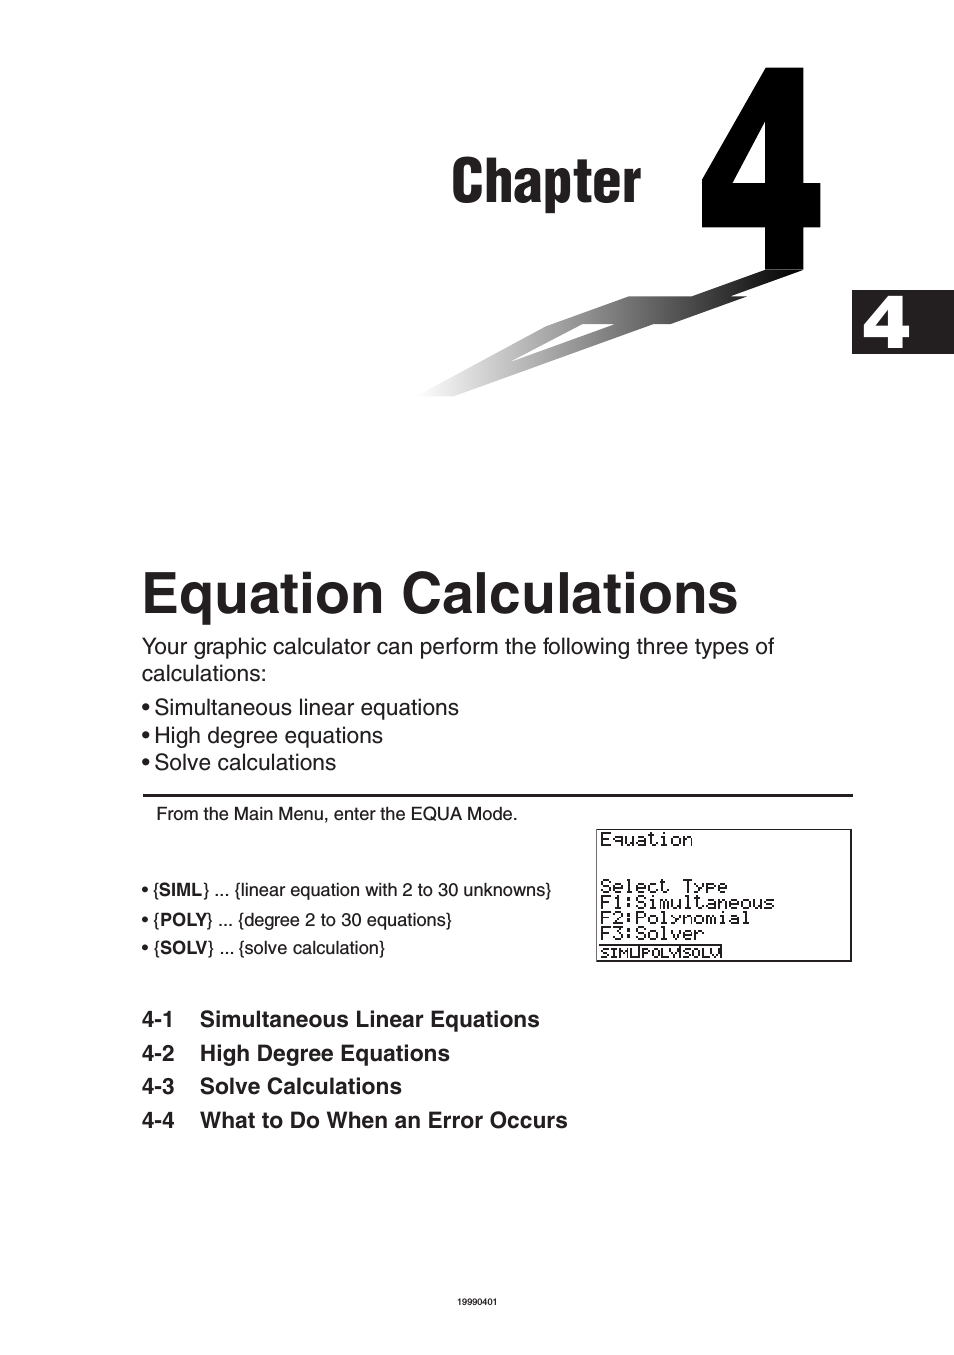 ALGEBRA FX 2.0 Equation Calculations